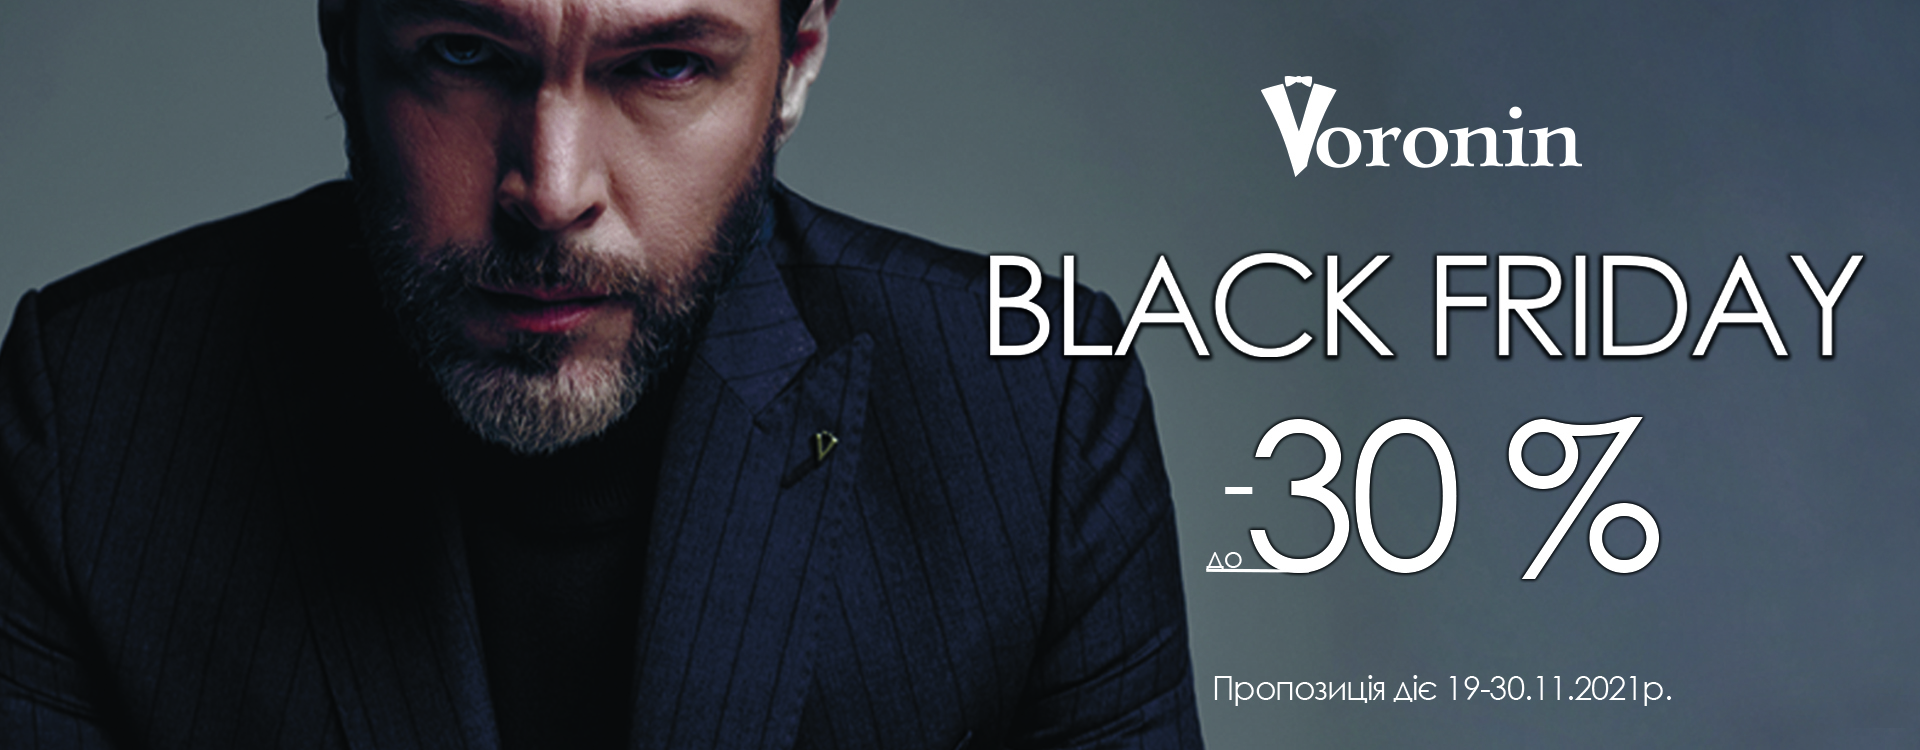 Black Friday Discounts at Voronin